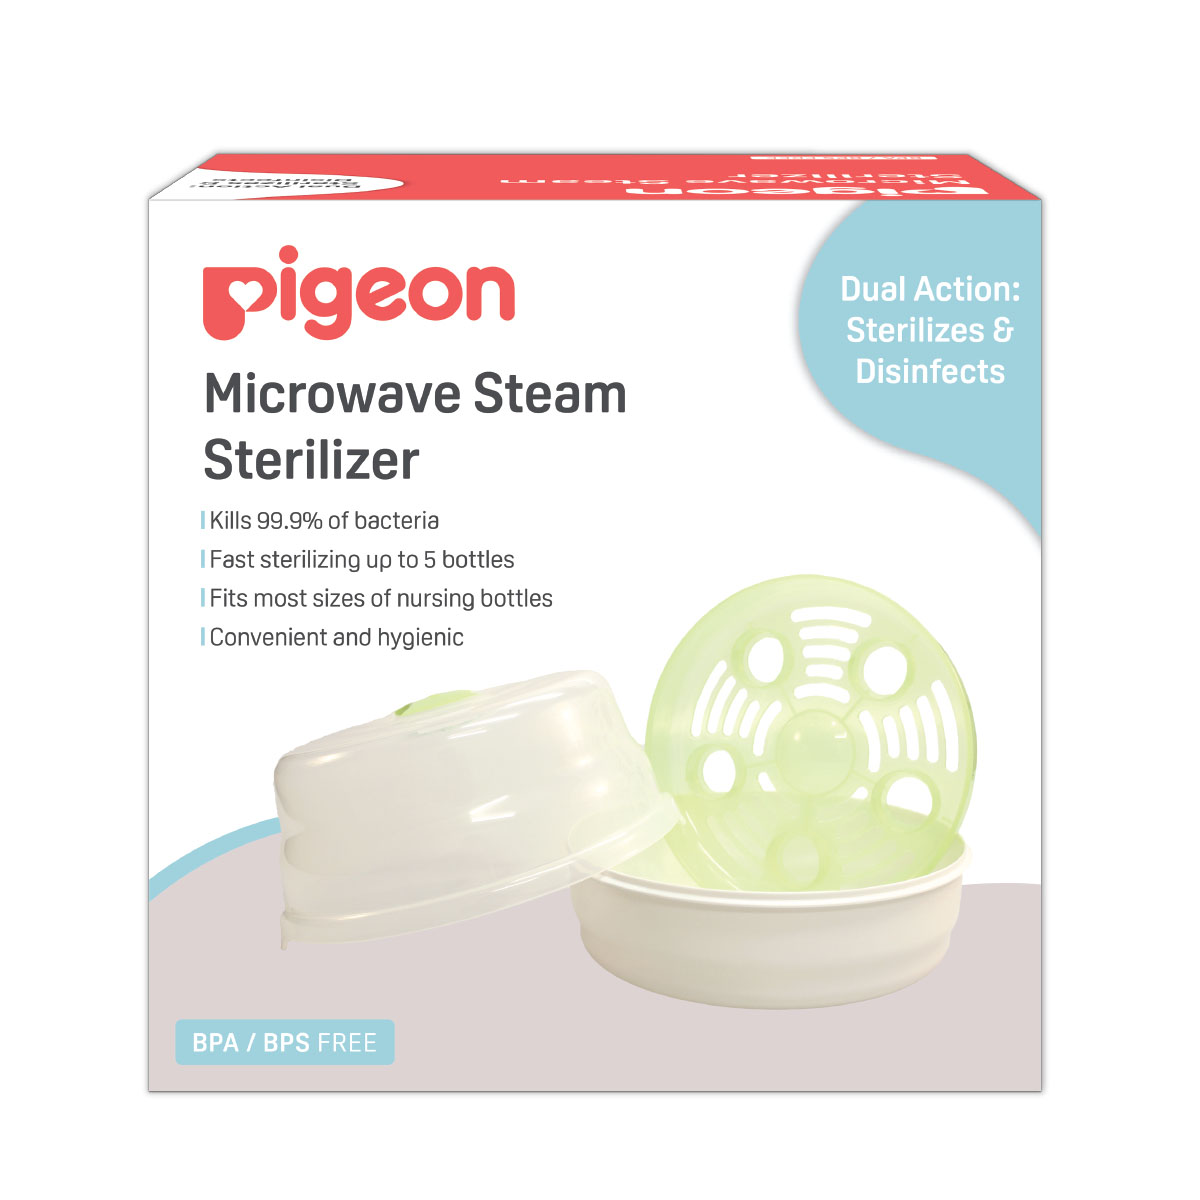 Pigeon Microwave Steam Sterilizer